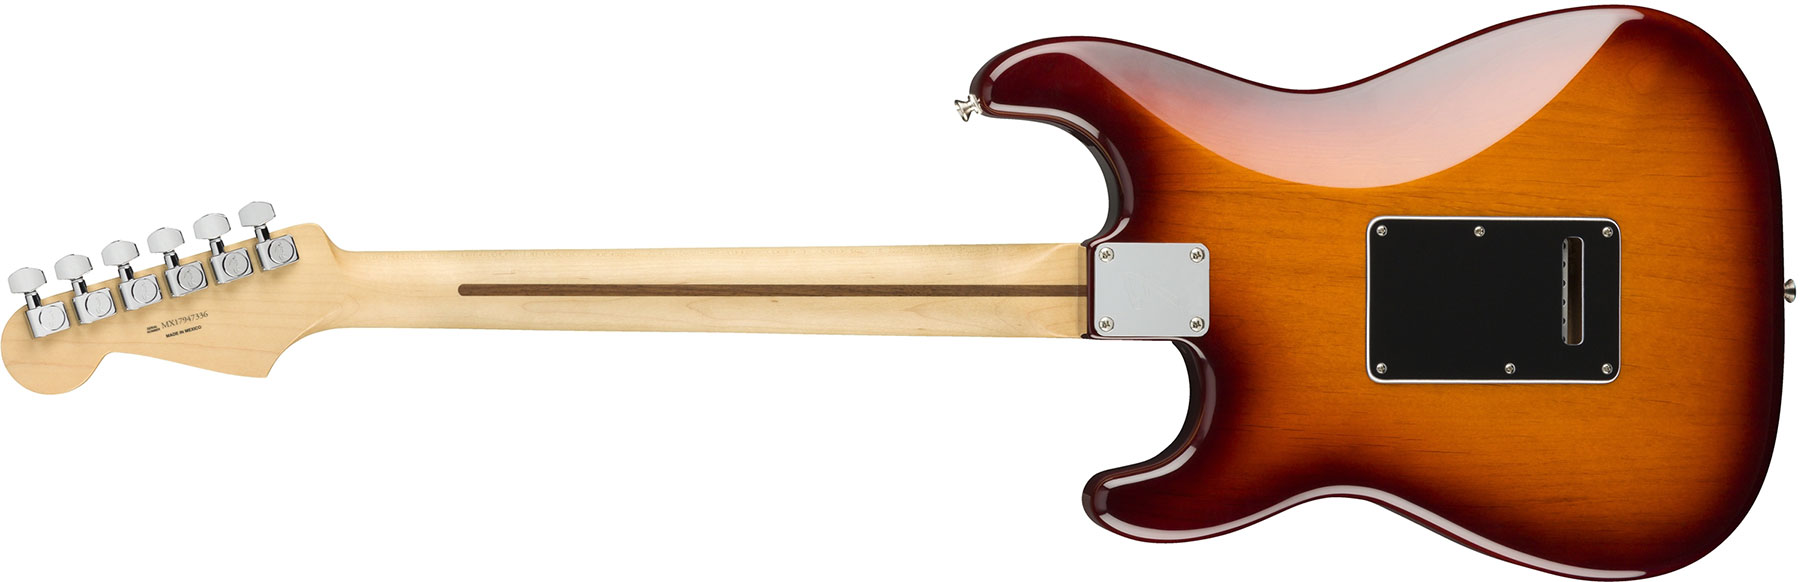 Fender Strat Player Plus Top Mex Hss Pf - Tobacco Burst - Guitarra eléctrica con forma de str. - Variation 1